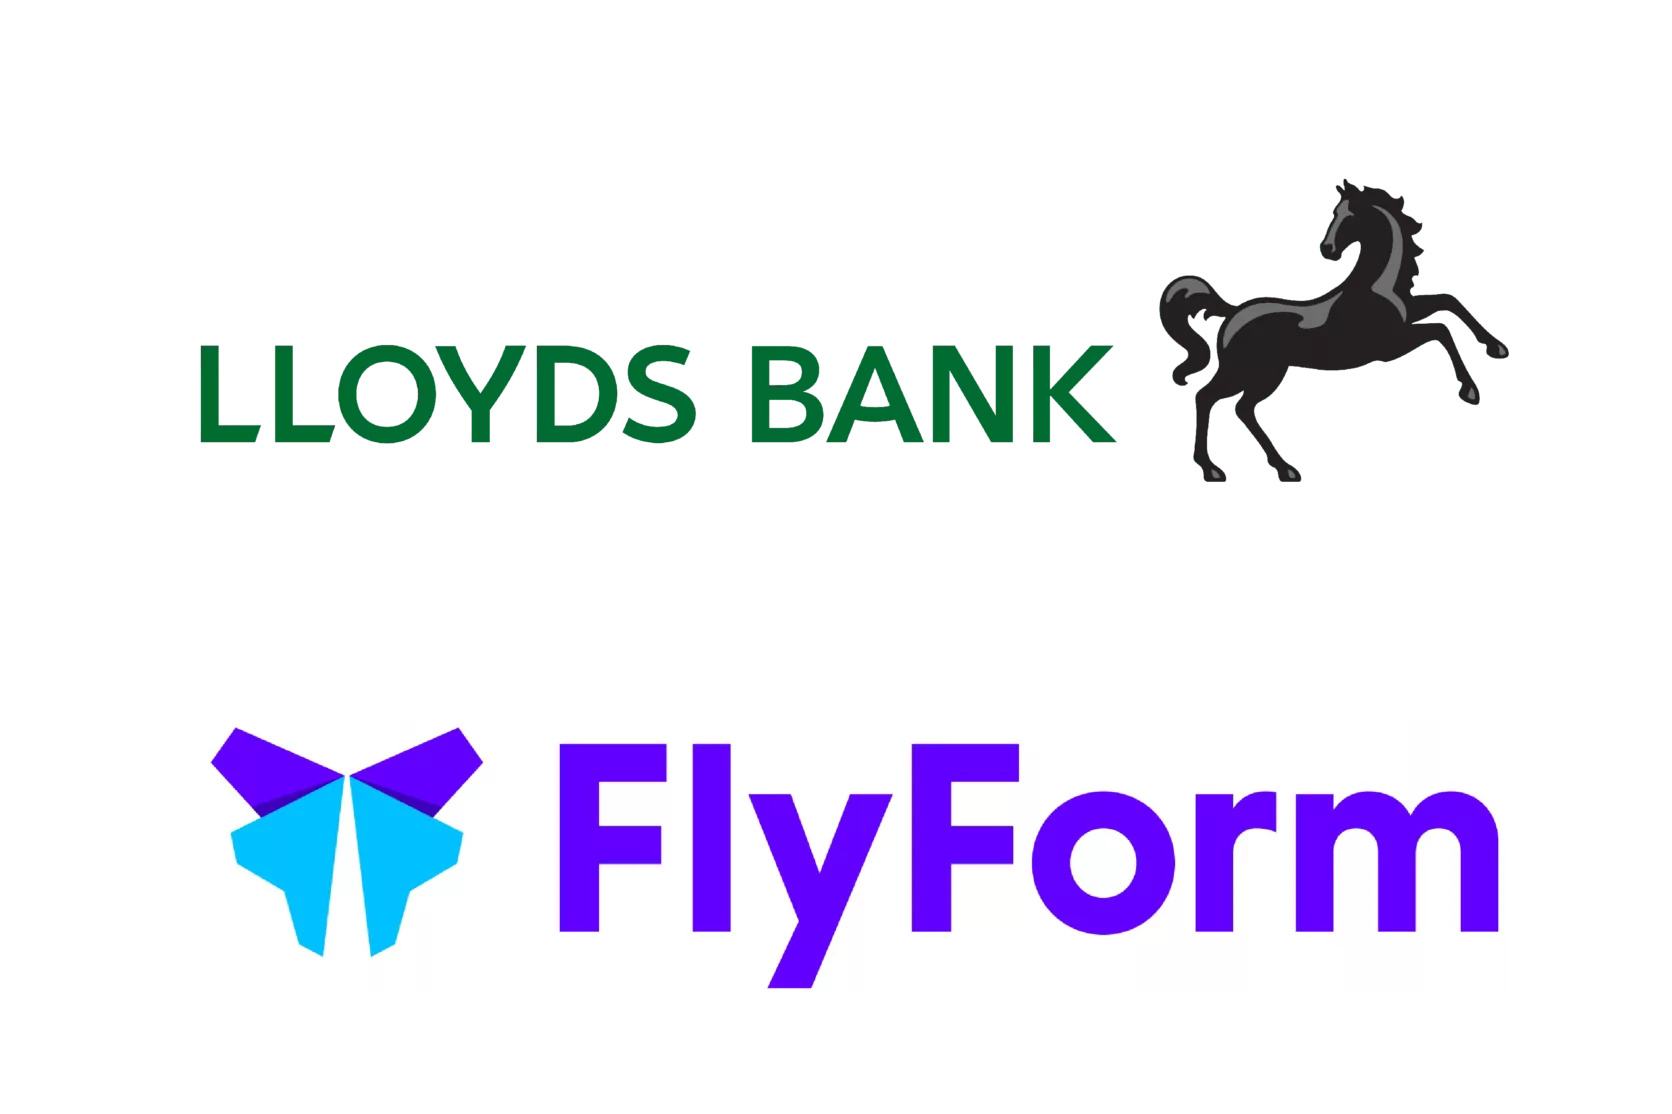 FlyForm logo and Lloyds Bank logo